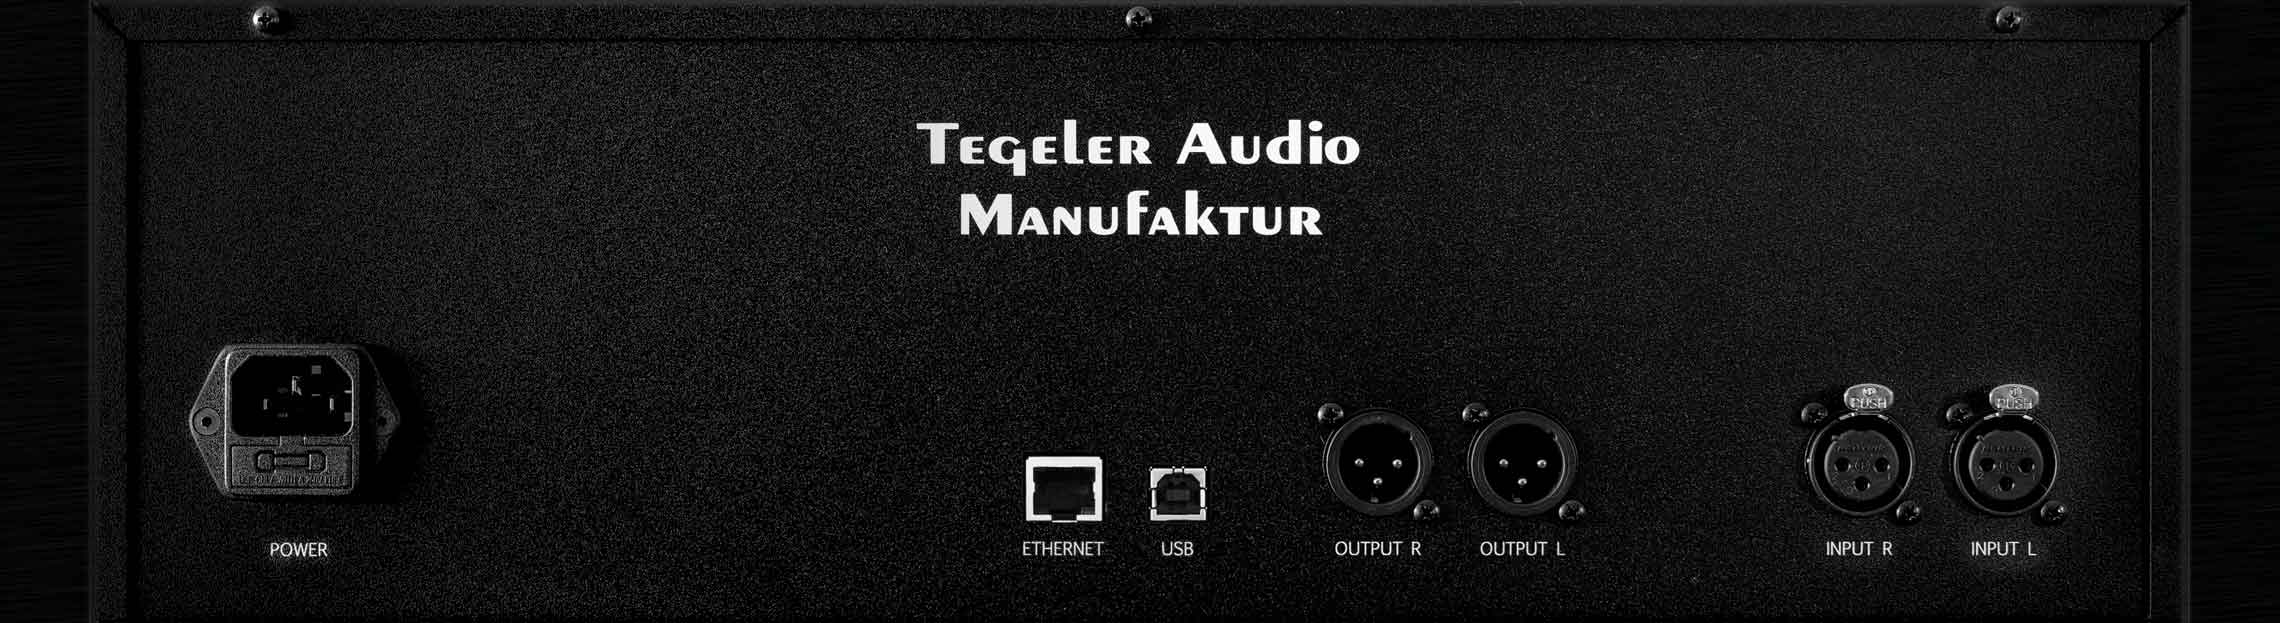 Tegeler Audio Manufaktur Schwerkraftmaschine - Effecten processor - Variation 1